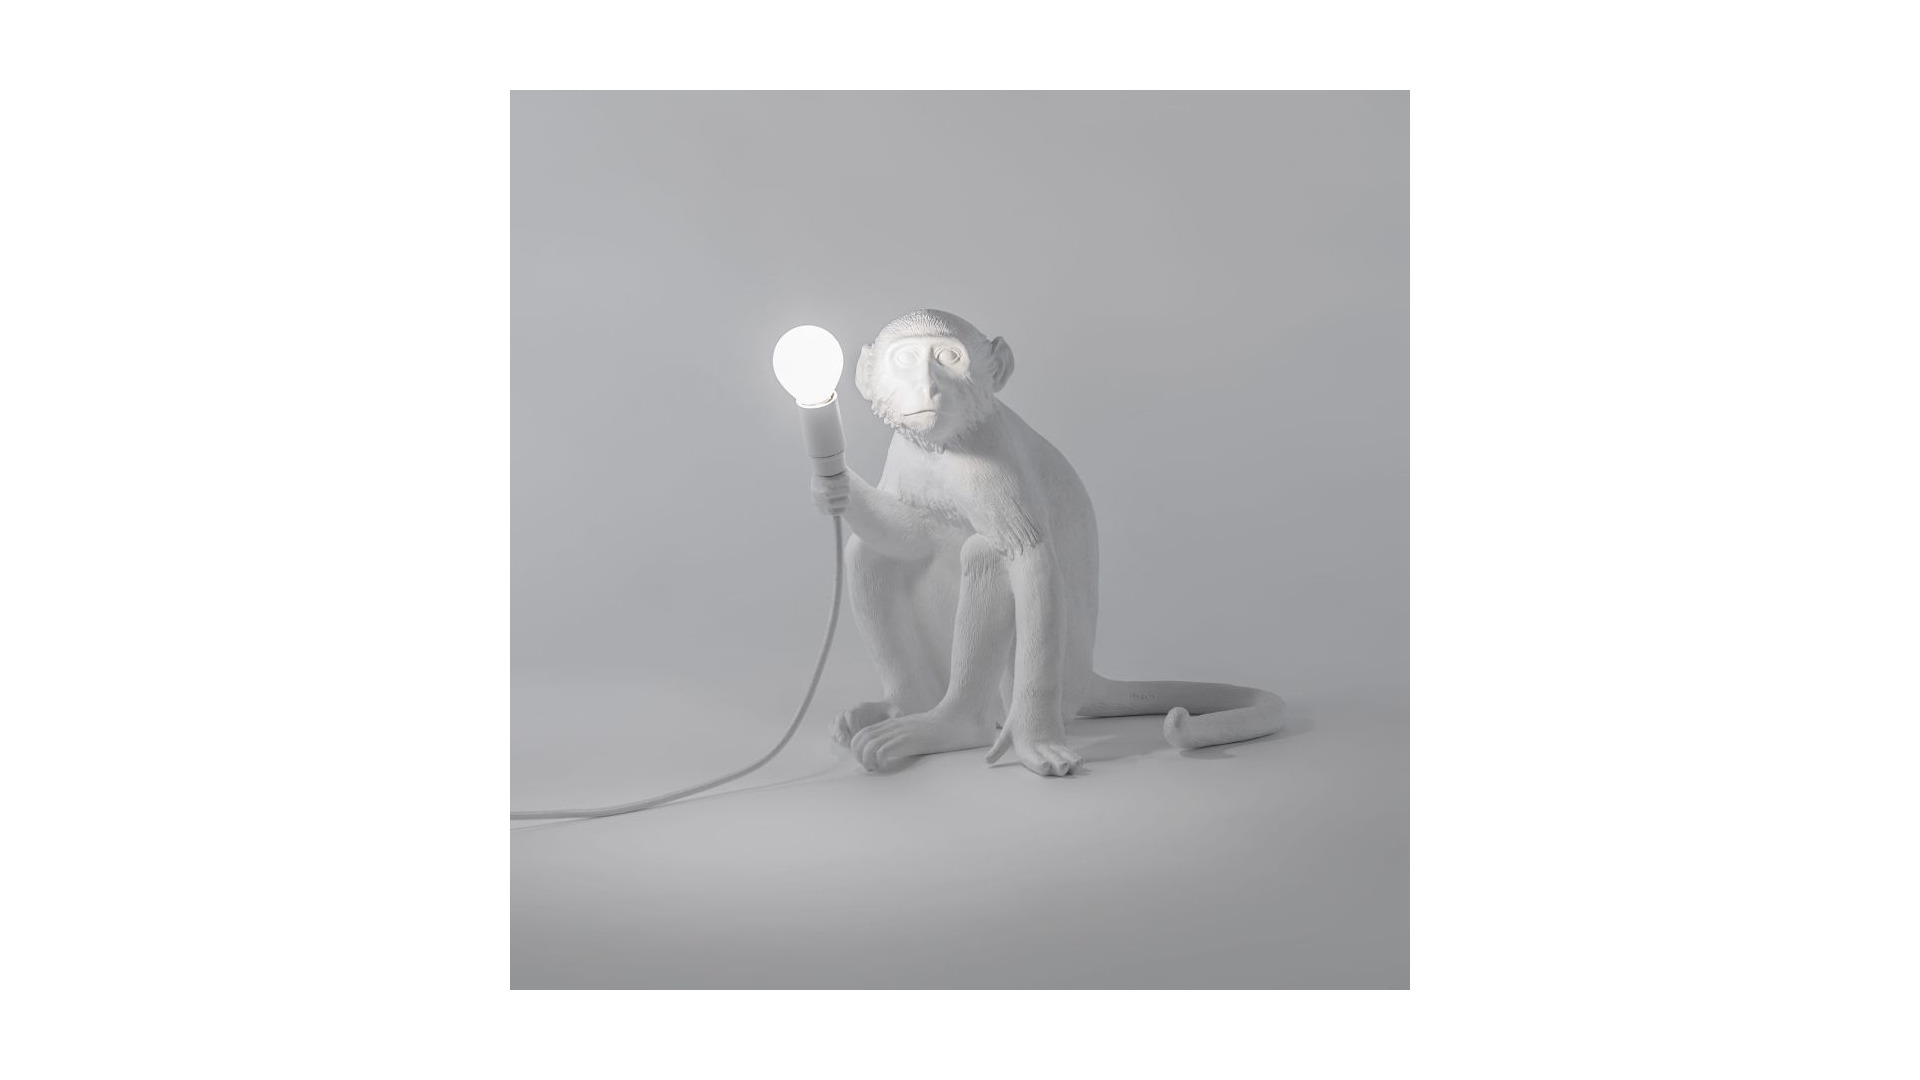 Настольная лампа Seletti Обезьяна сидит 34х30 см, h32 см см, смола, белая